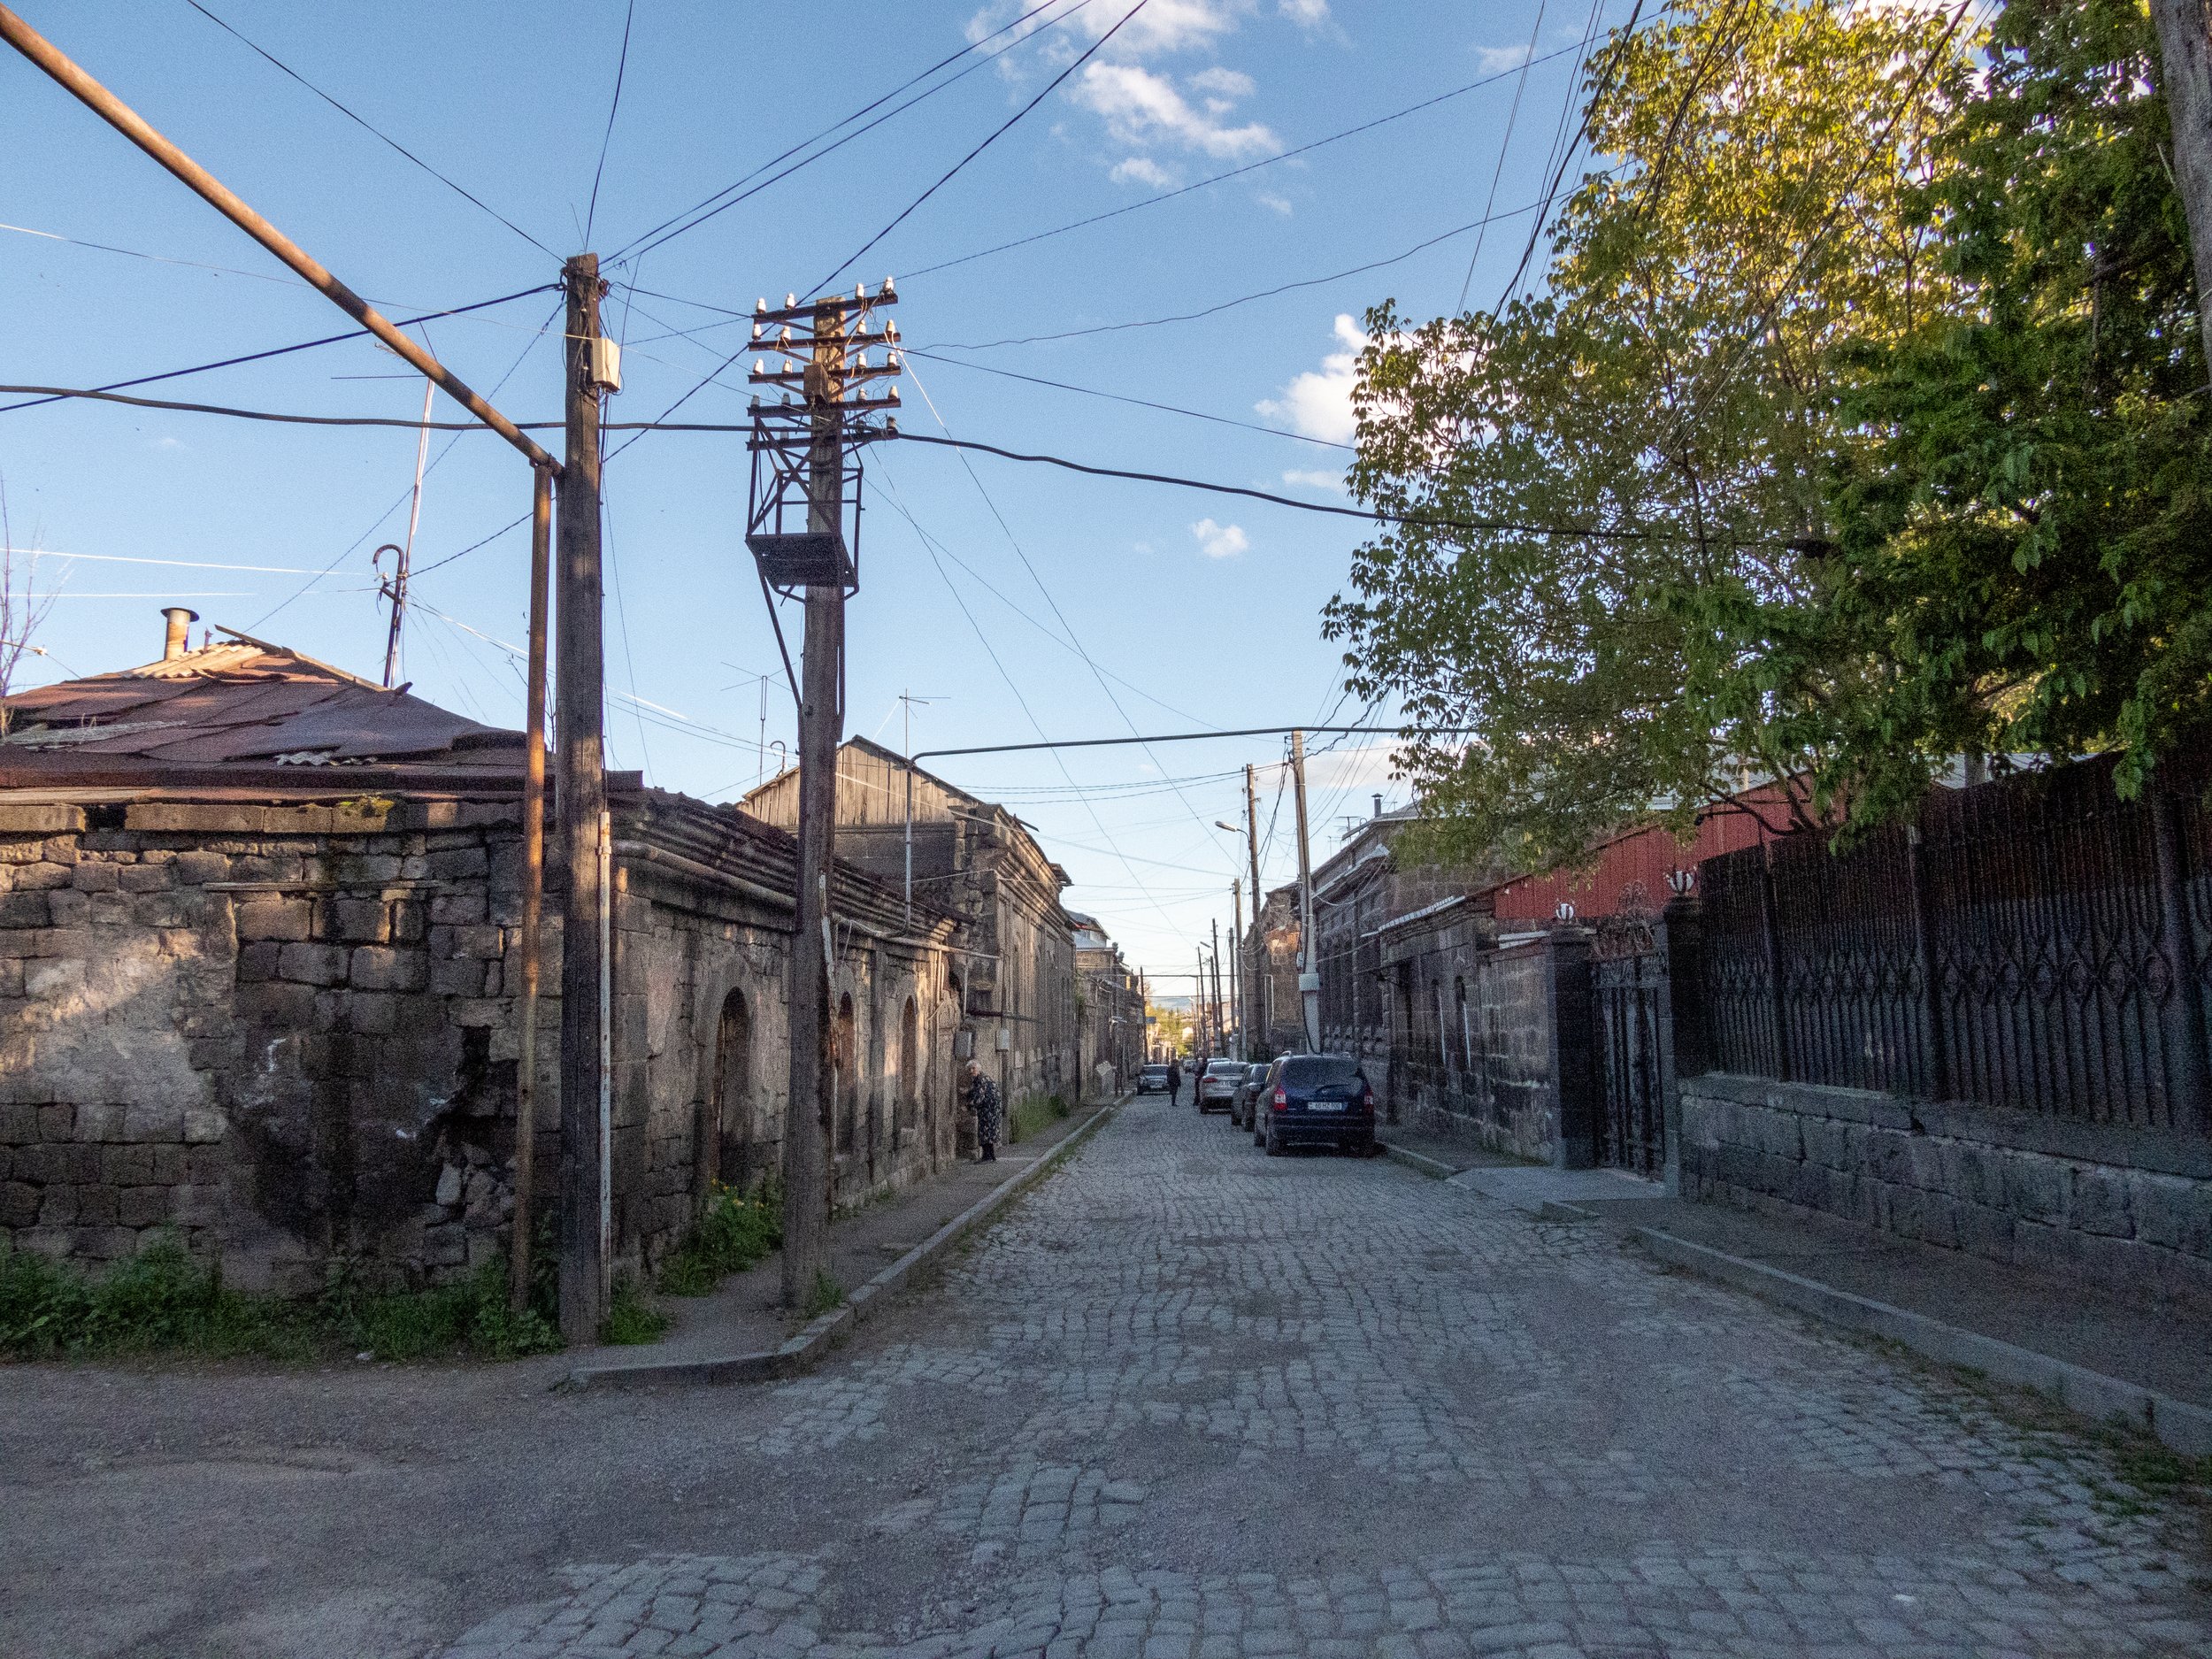  Street, Gyumri, Armenia 